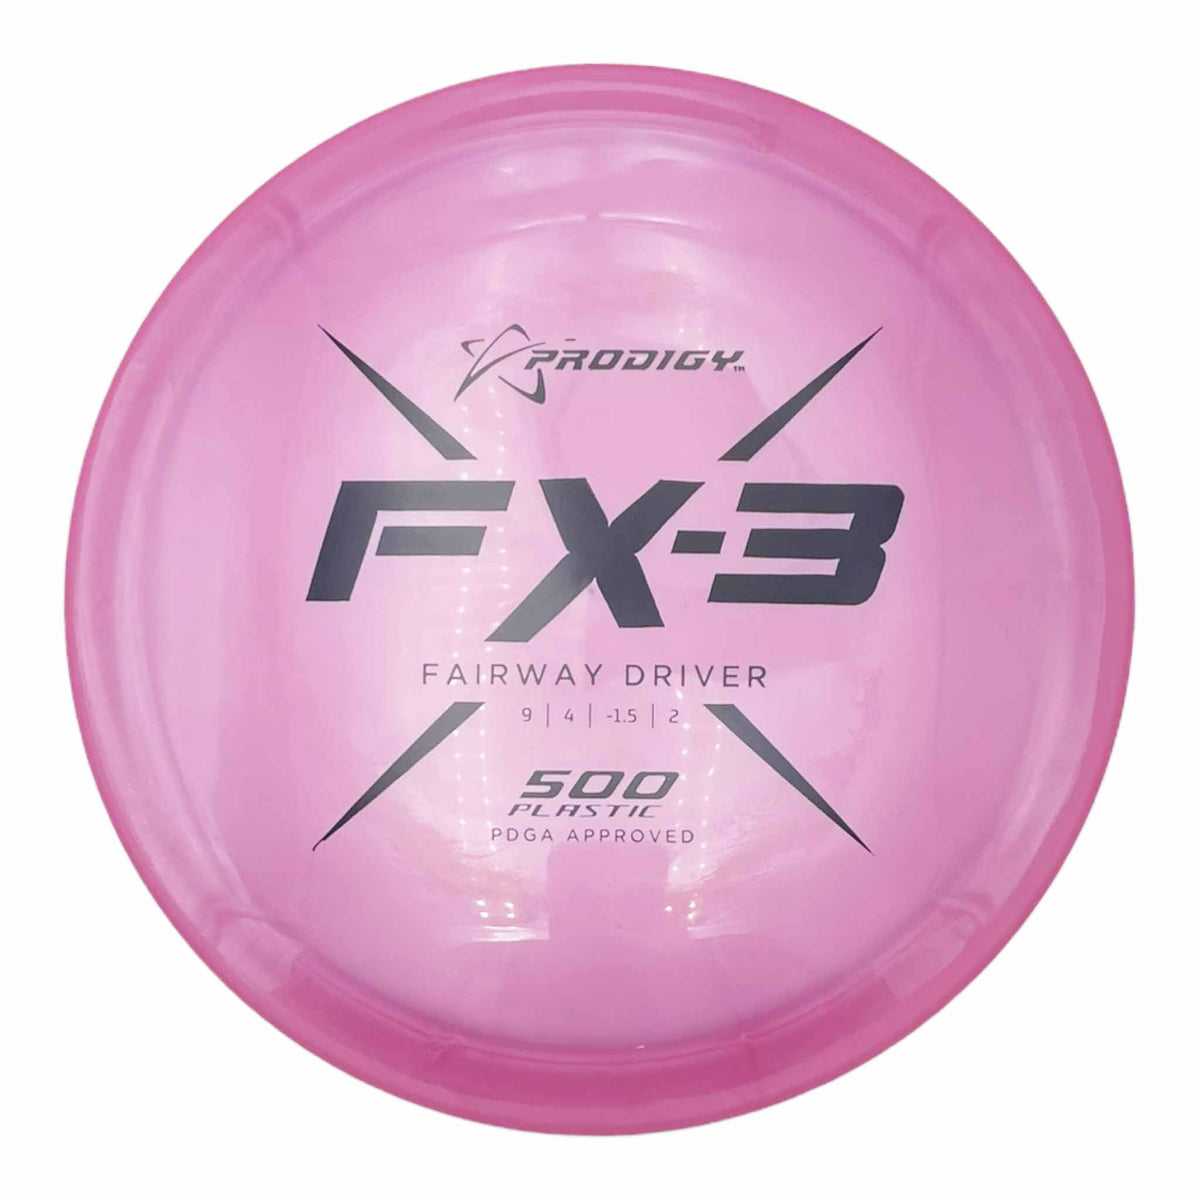 Prodigy 500 FX-3 fairway driver - Pink / Black